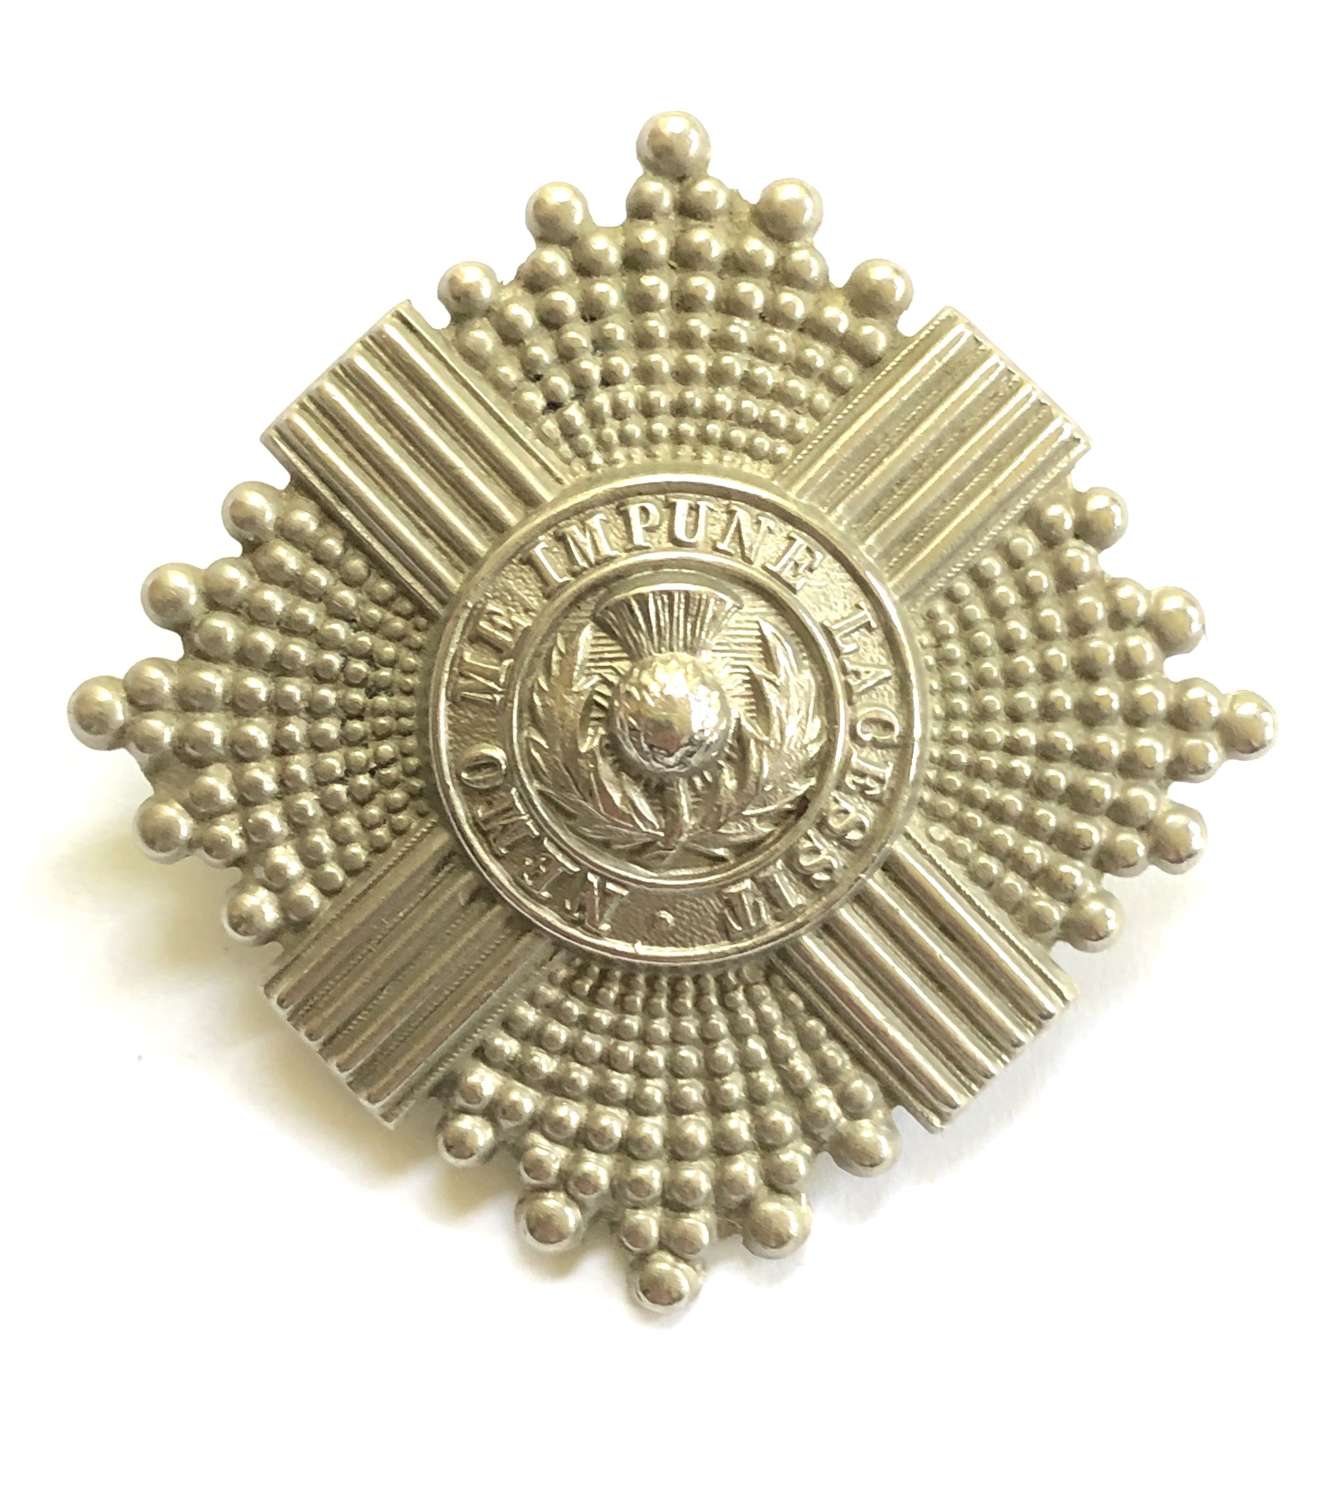 9th (Highlanders) VB Royal Scots OR’s glengarry badge circa 1902-08